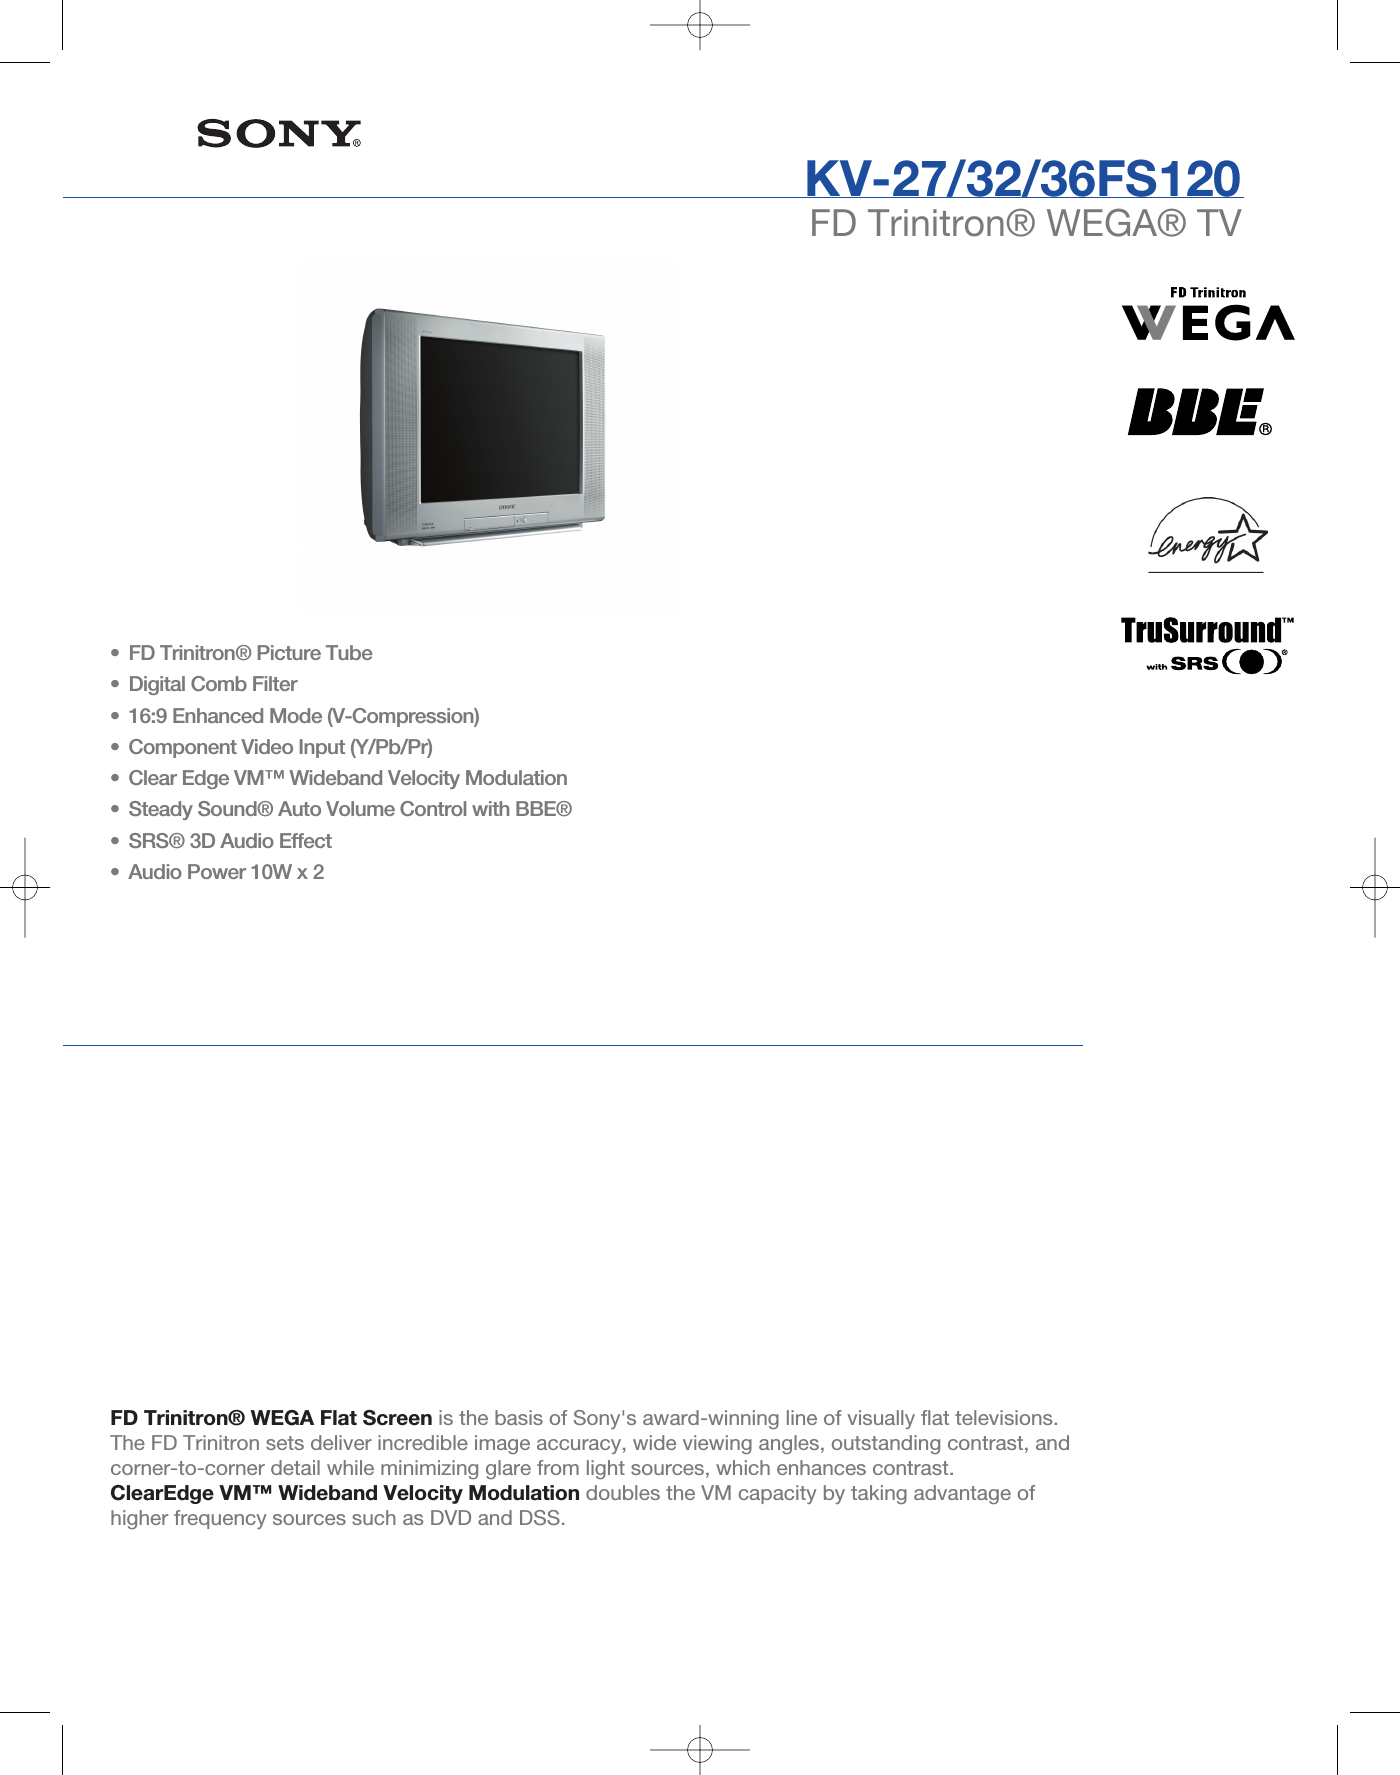 Page 1 of 2 - Sony KV-27FS120 User Manual Marketing Specifications KV27FS120 Mksp